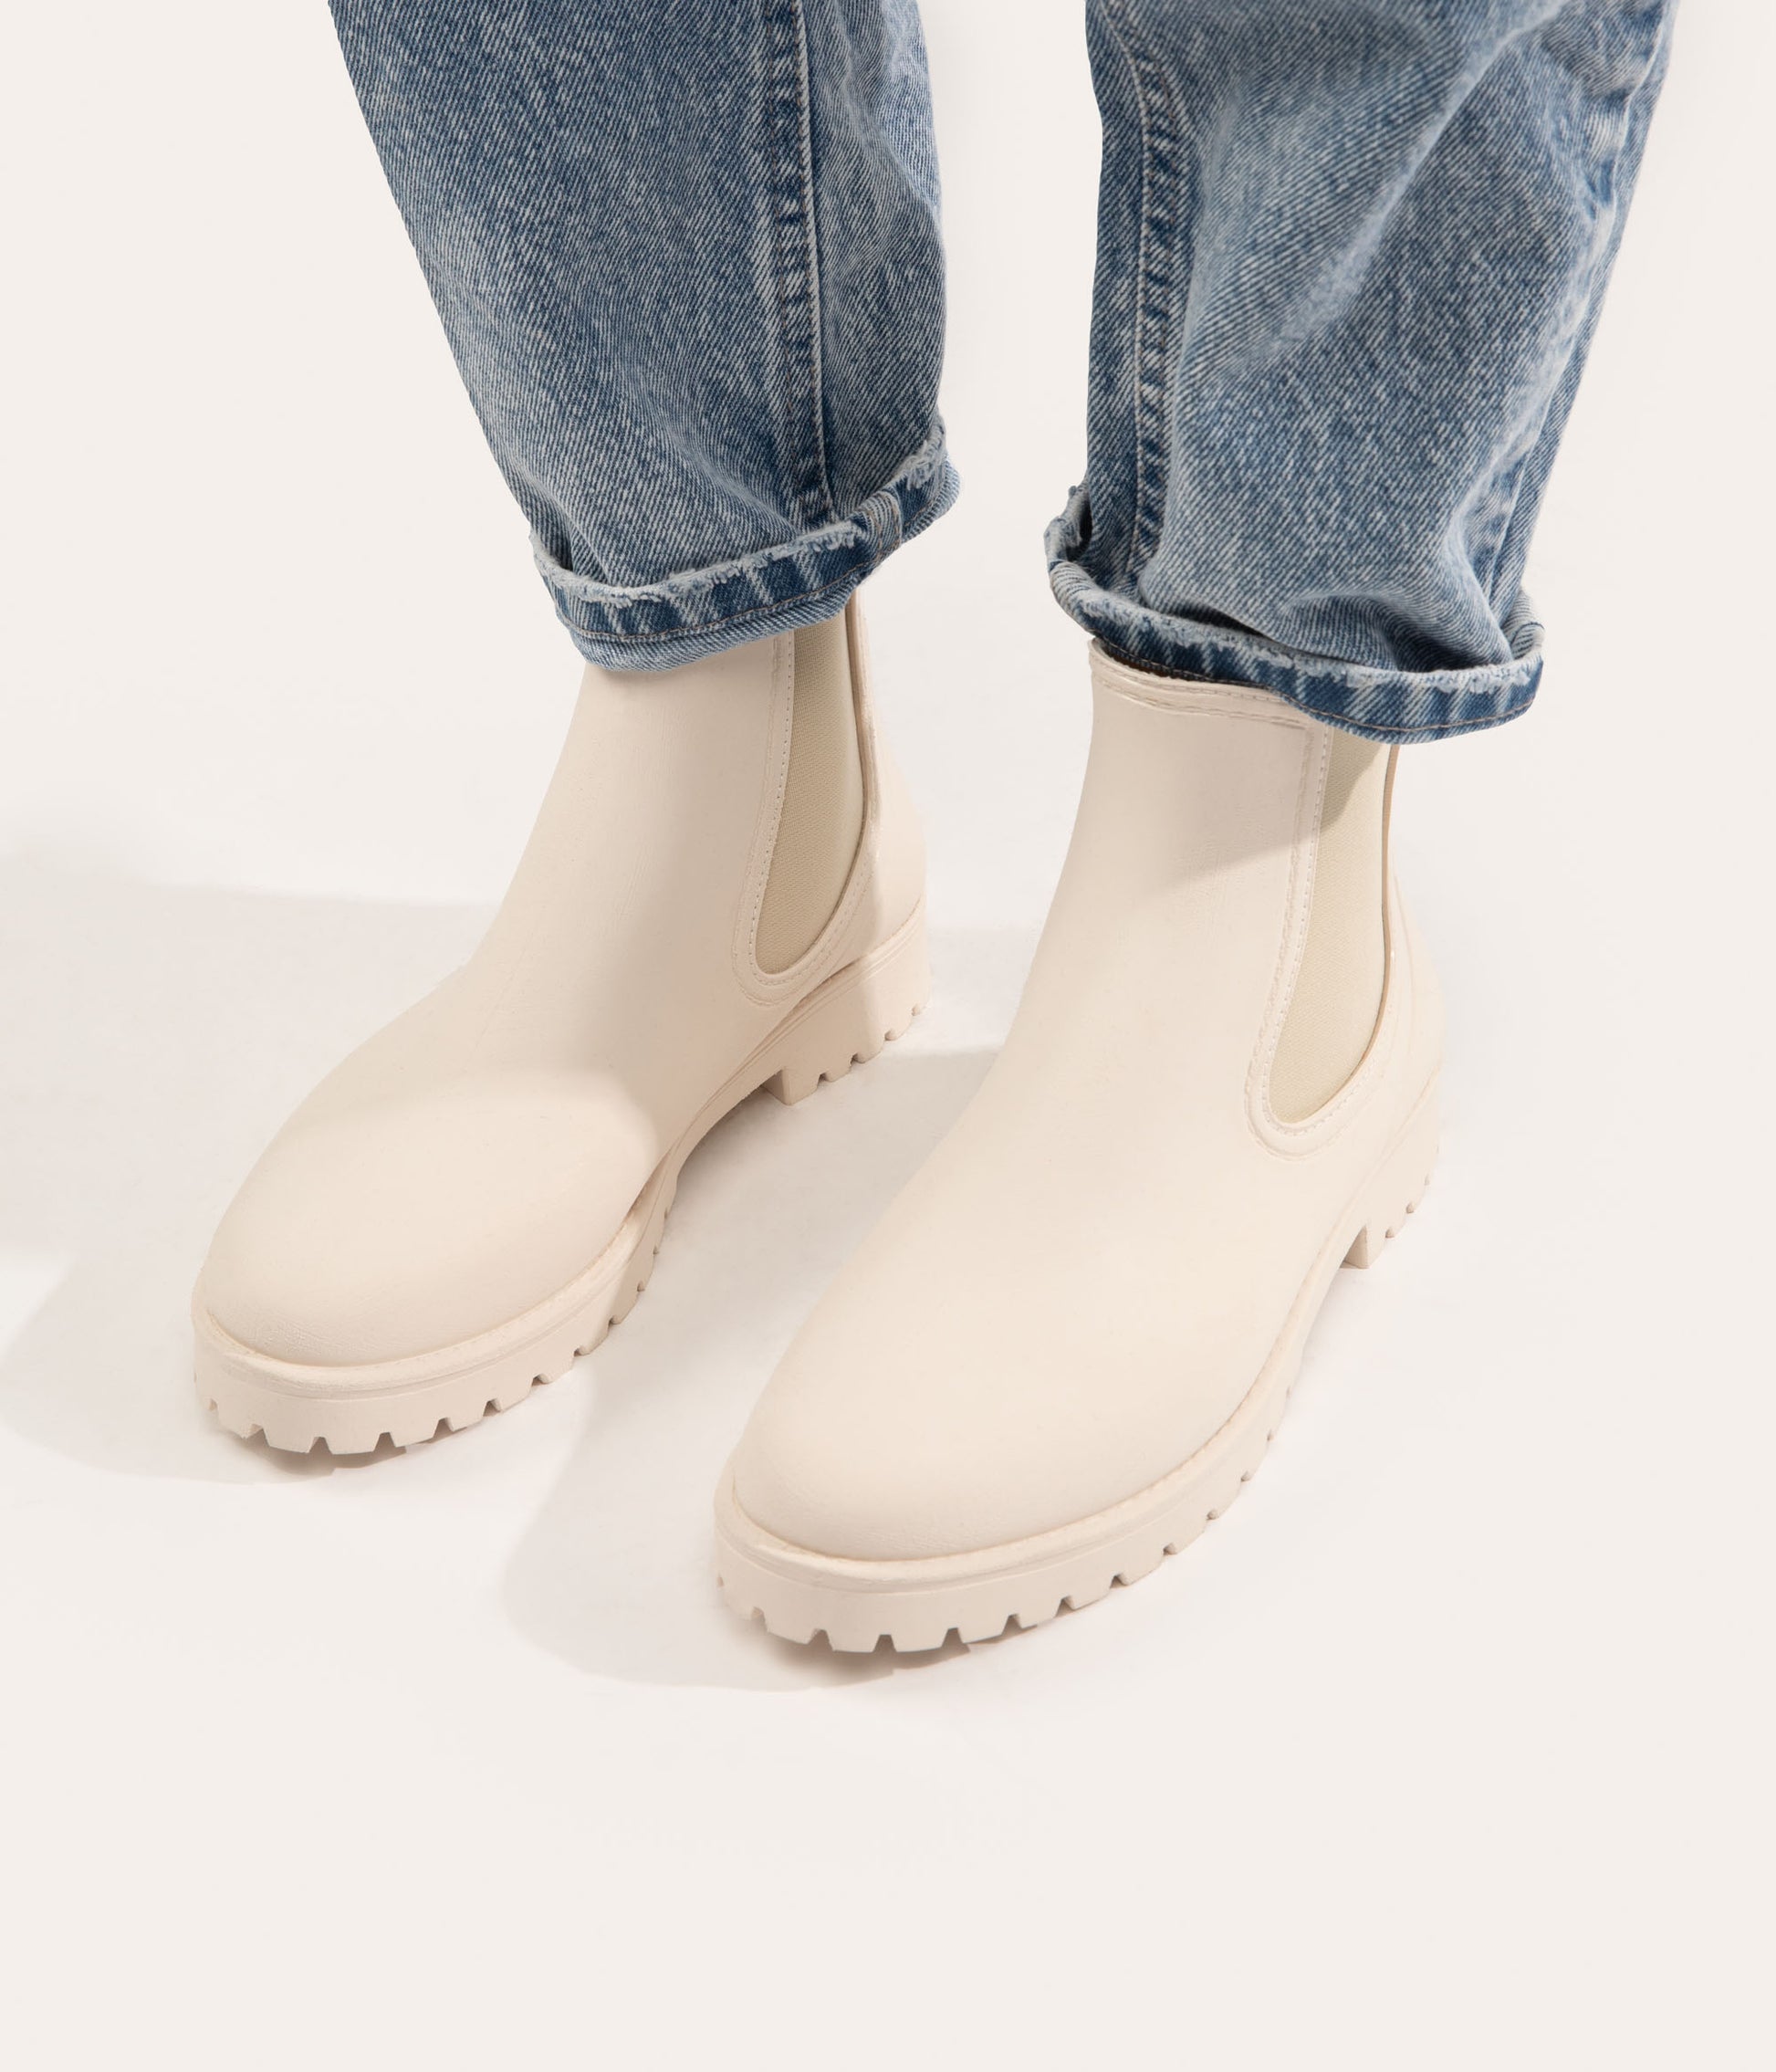 LANEY Women's Vegan Rain Boots | Color: Green - variant::matoli